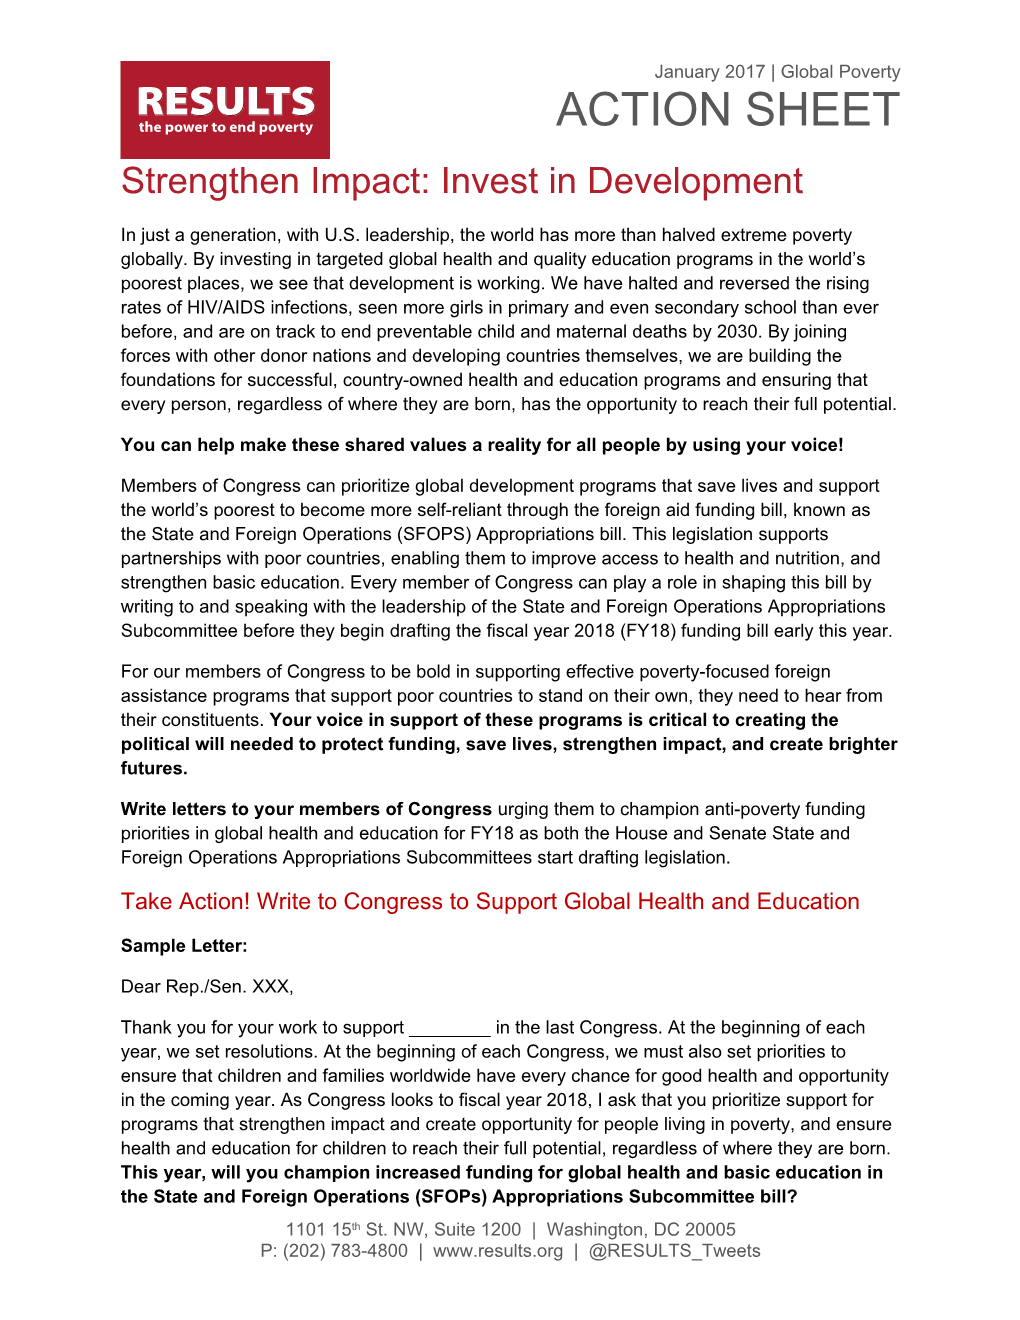 Strengthen Impact: Invest Indevelopment